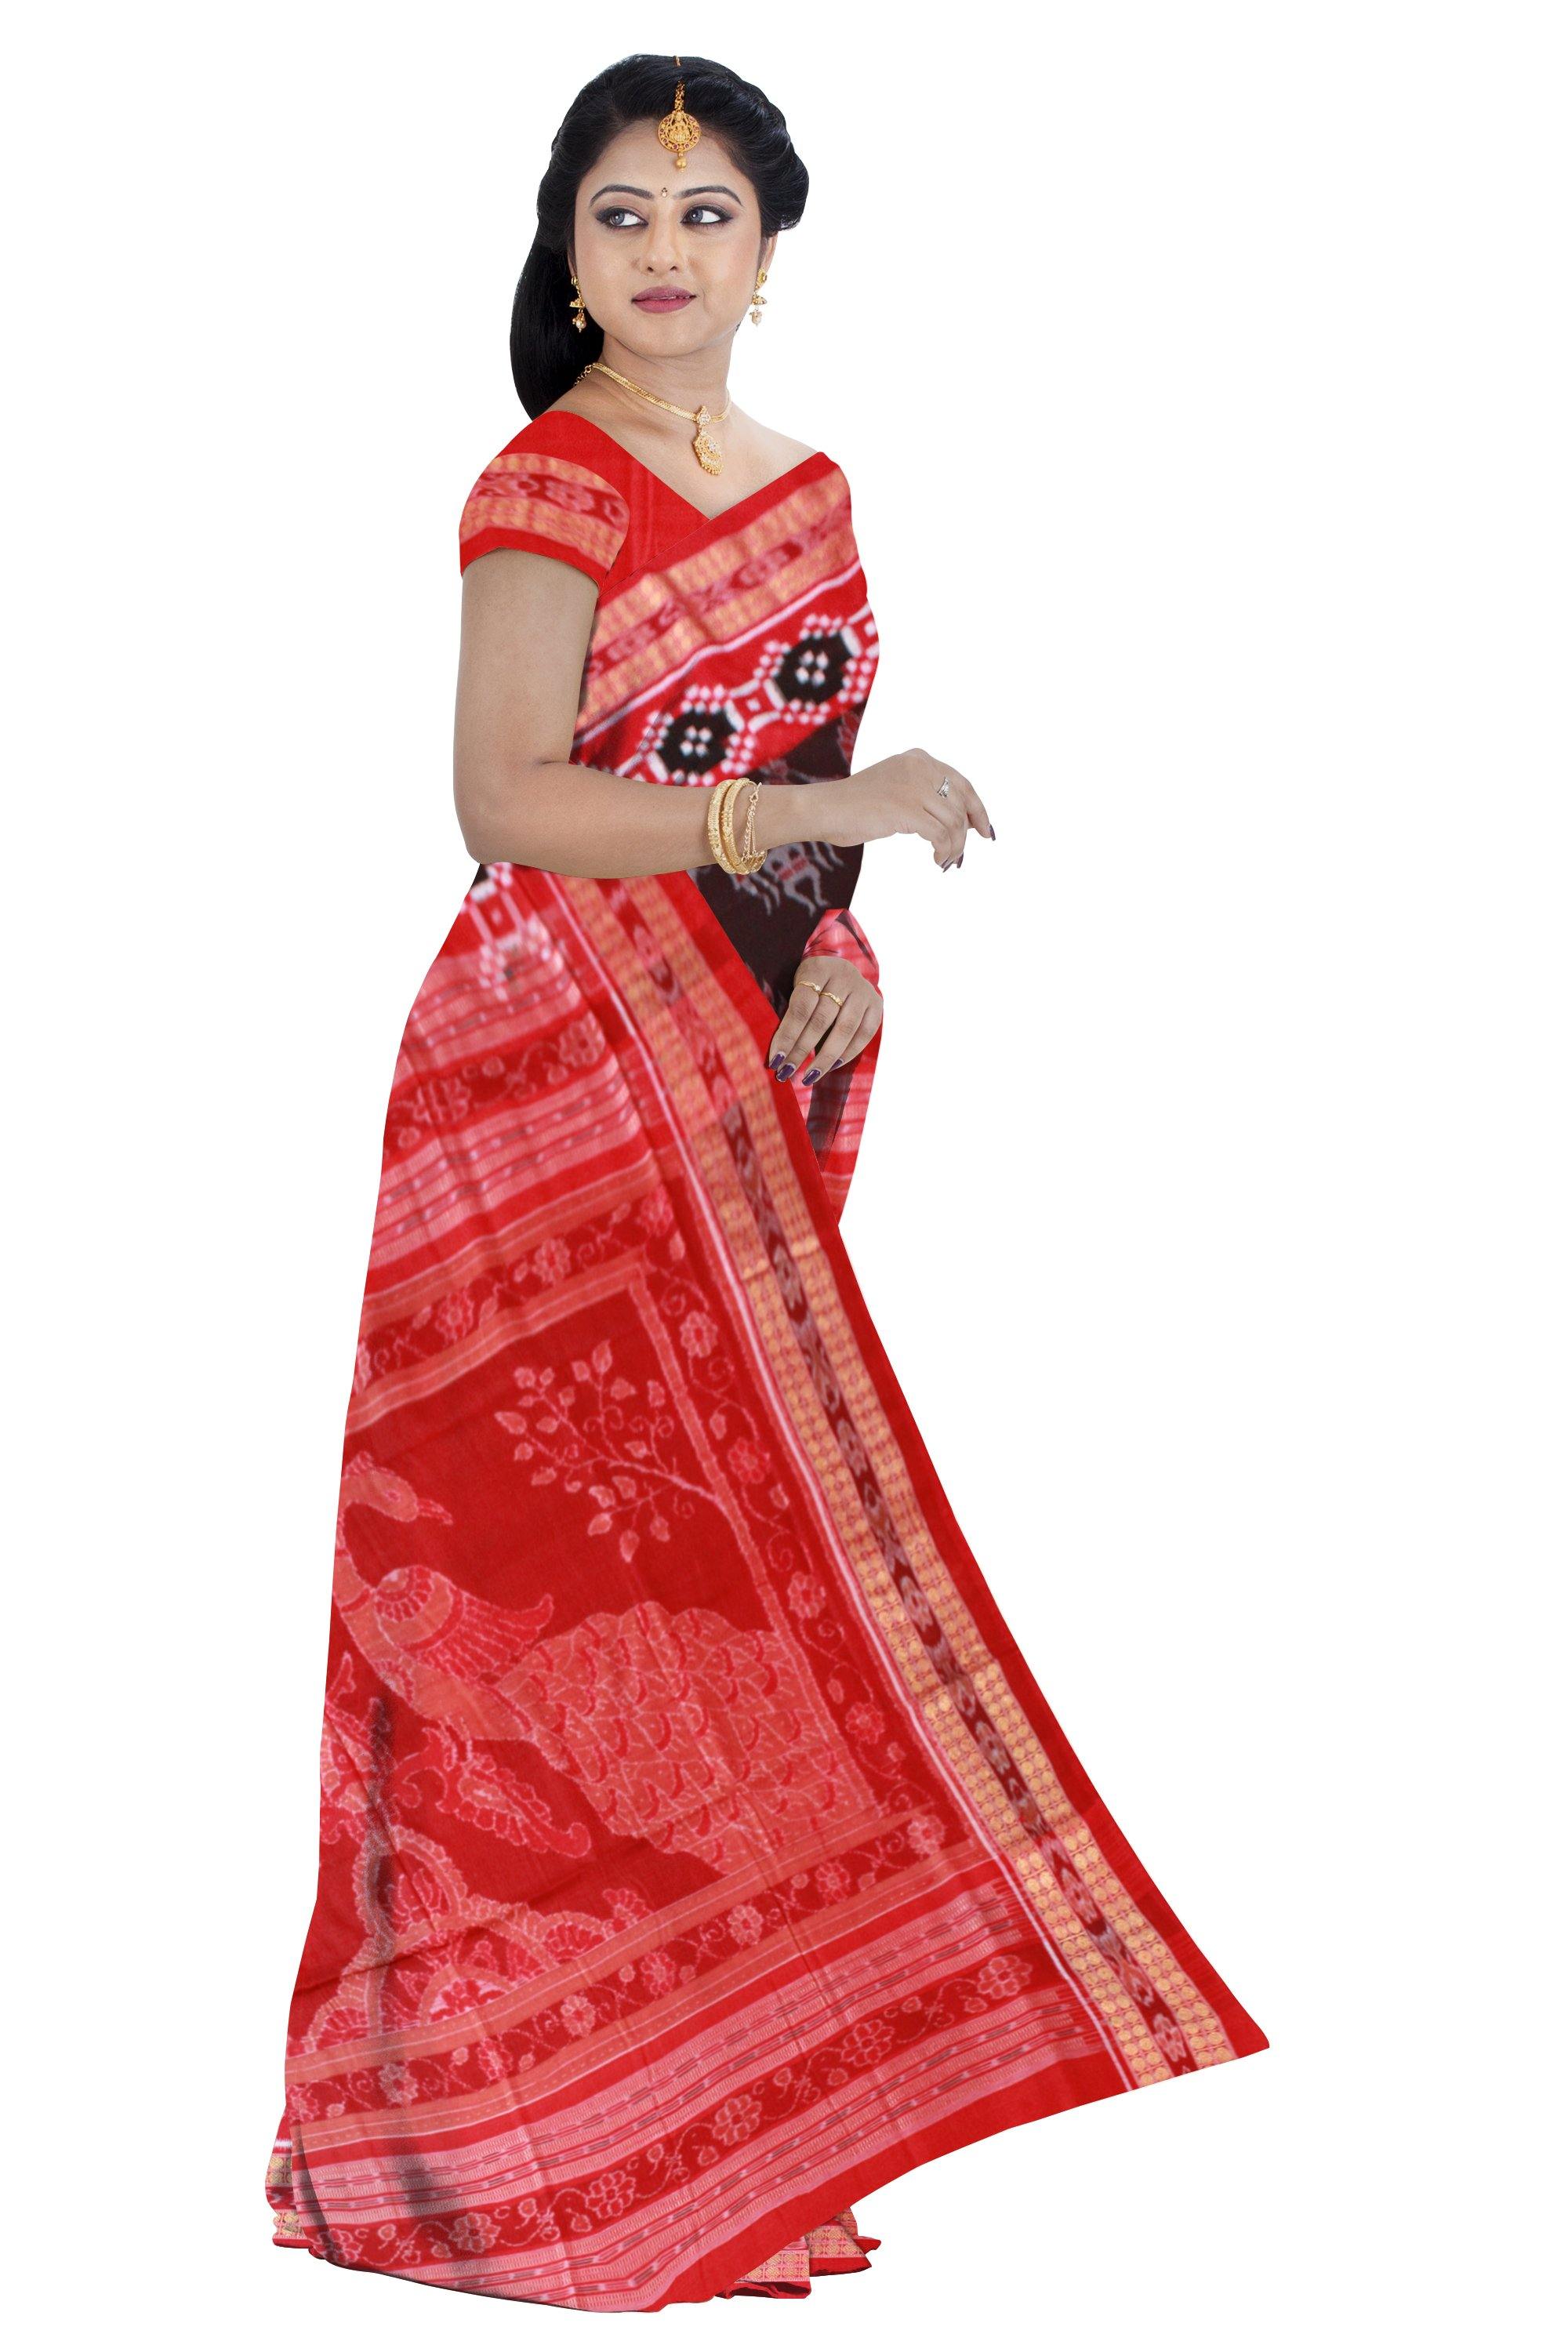 A Very Beautiful  Sambalpuri Bandha pattern saree in Anchi (Dark Brown) Colour with Pata Boarder and blouse piece in Maroon - Koshali Arts & Crafts Enterprise